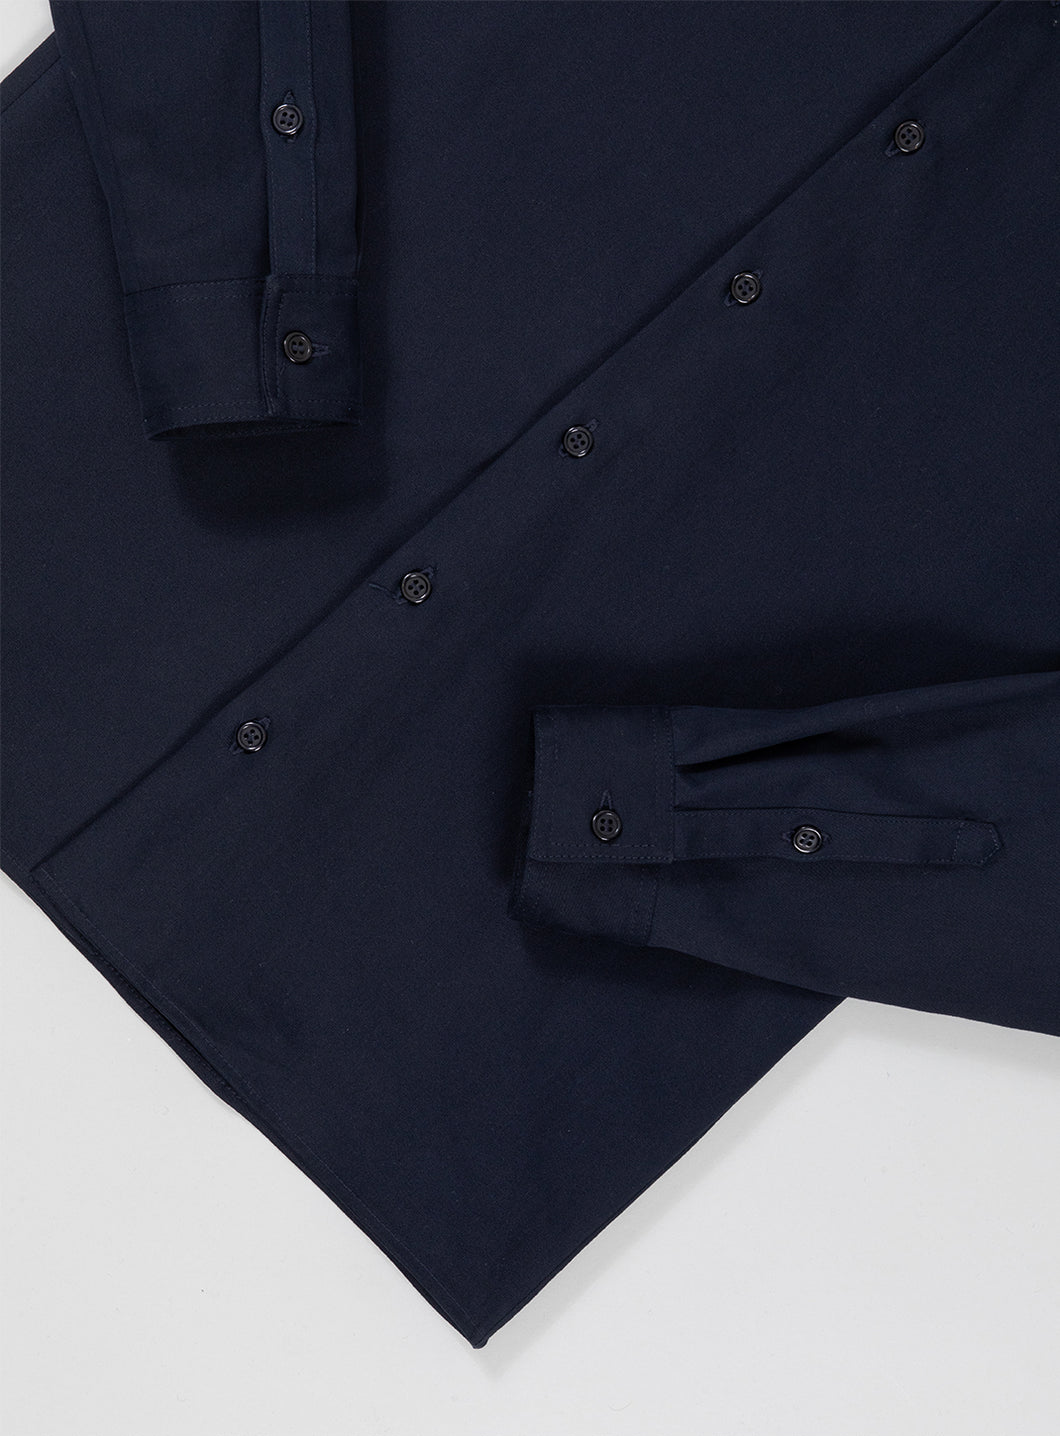 Raglan Sleeve Overshirt in Navy Blue Cotton Gabardine